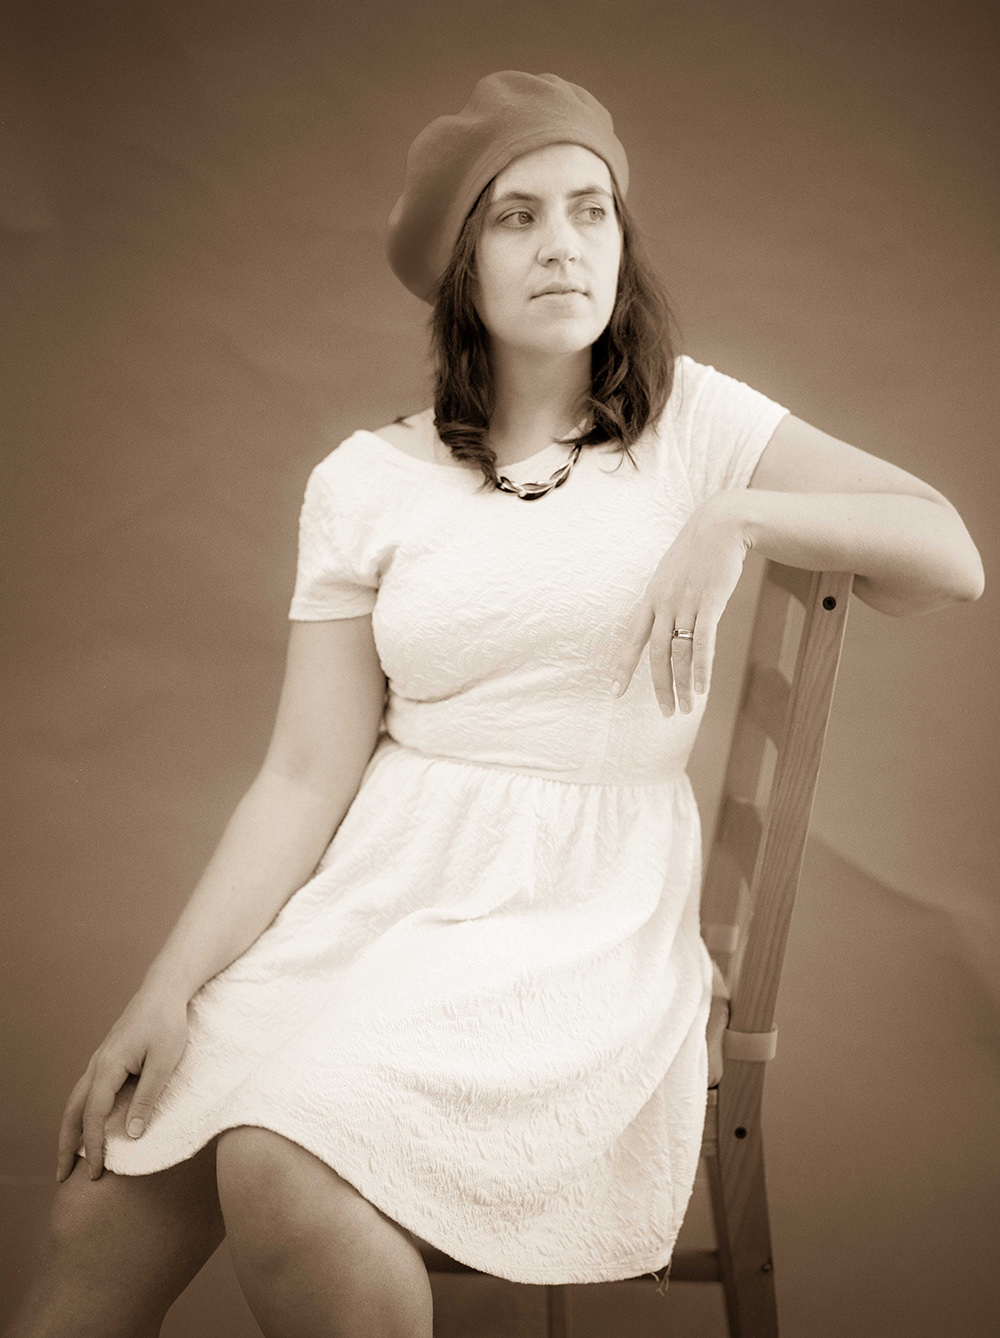 Amy Portrait sitting on chair